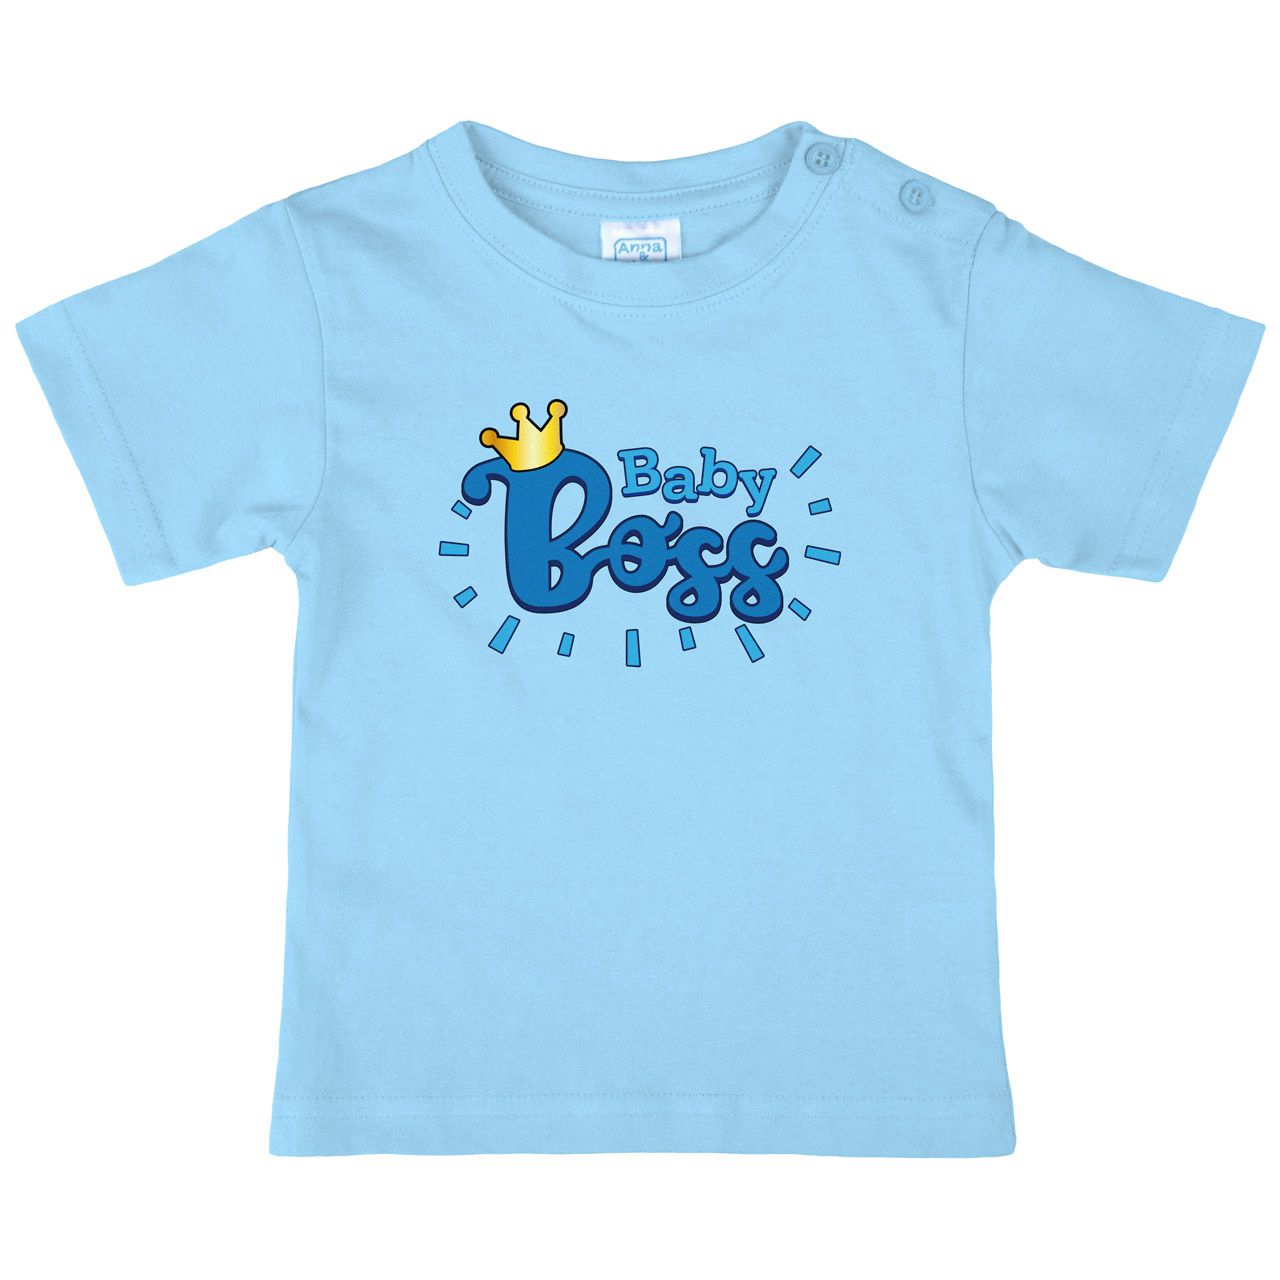 Baby Boss Blau Kinder T-Shirt hellblau 56 / 62